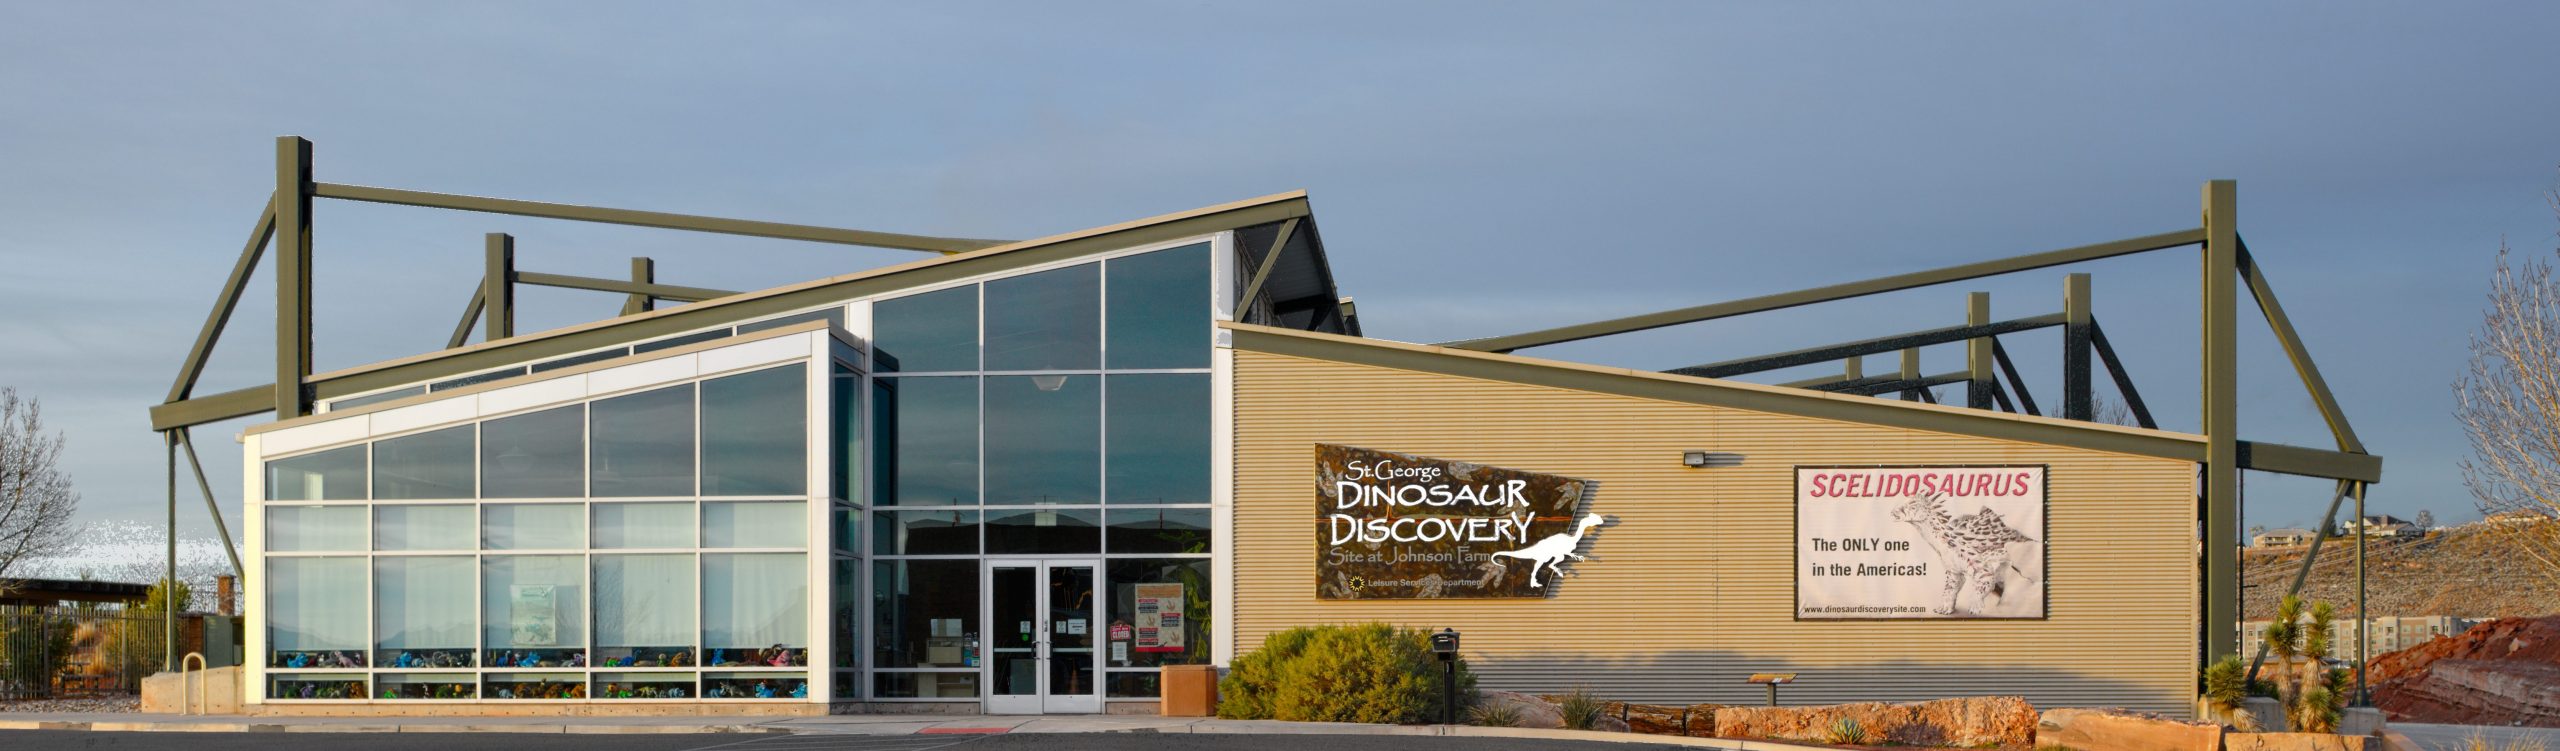 St. George Dinosaur Site Building